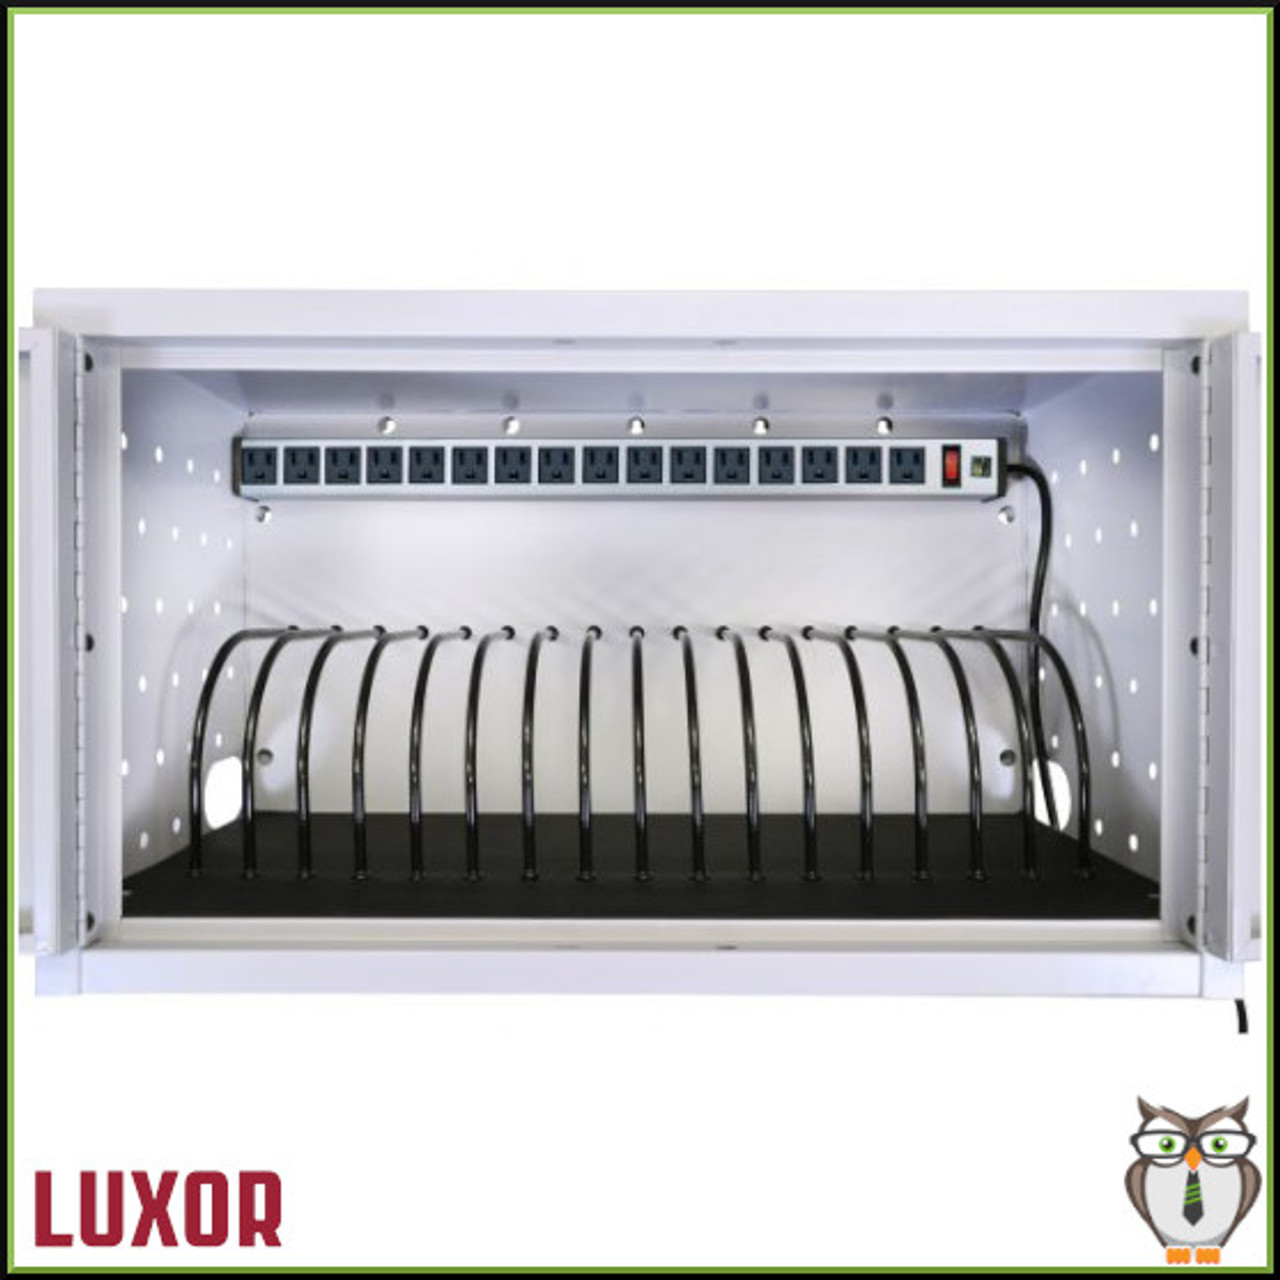 Luxor 16-Tablet Wall / Desk Charging Box (LLTMW16-G) - Inside